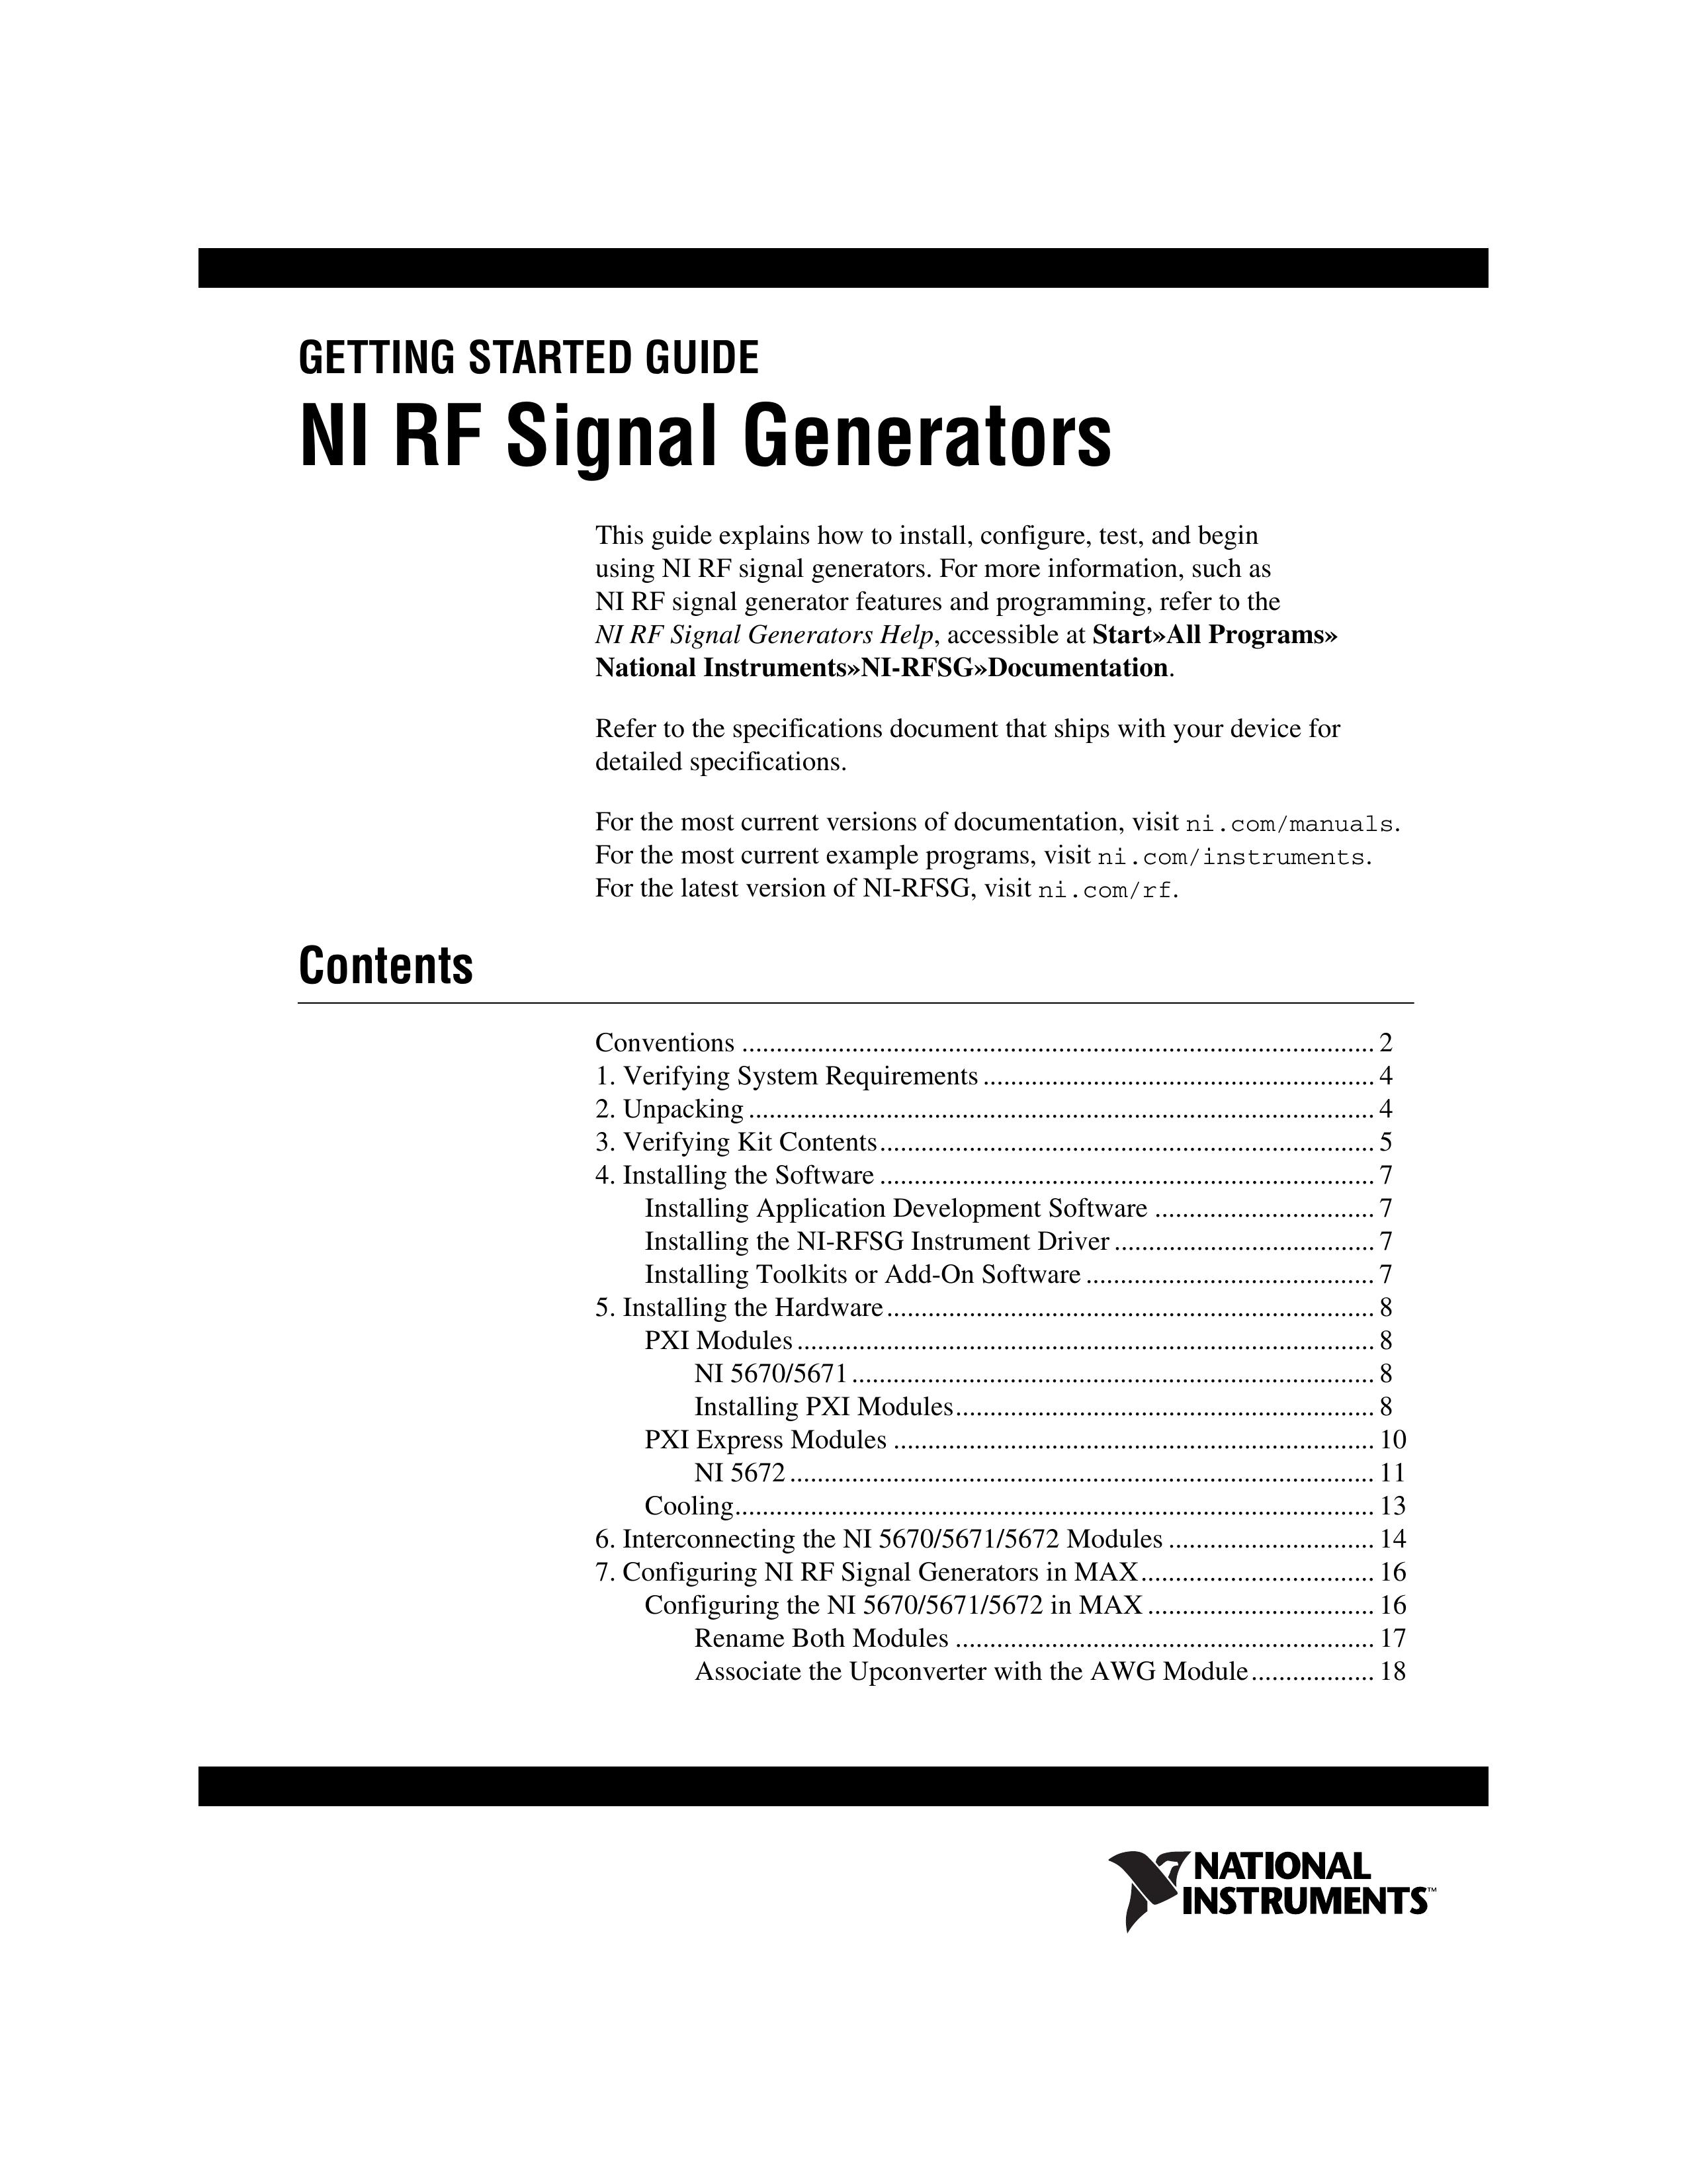 National Instruments RF Signal Generator Portable Generator User Manual